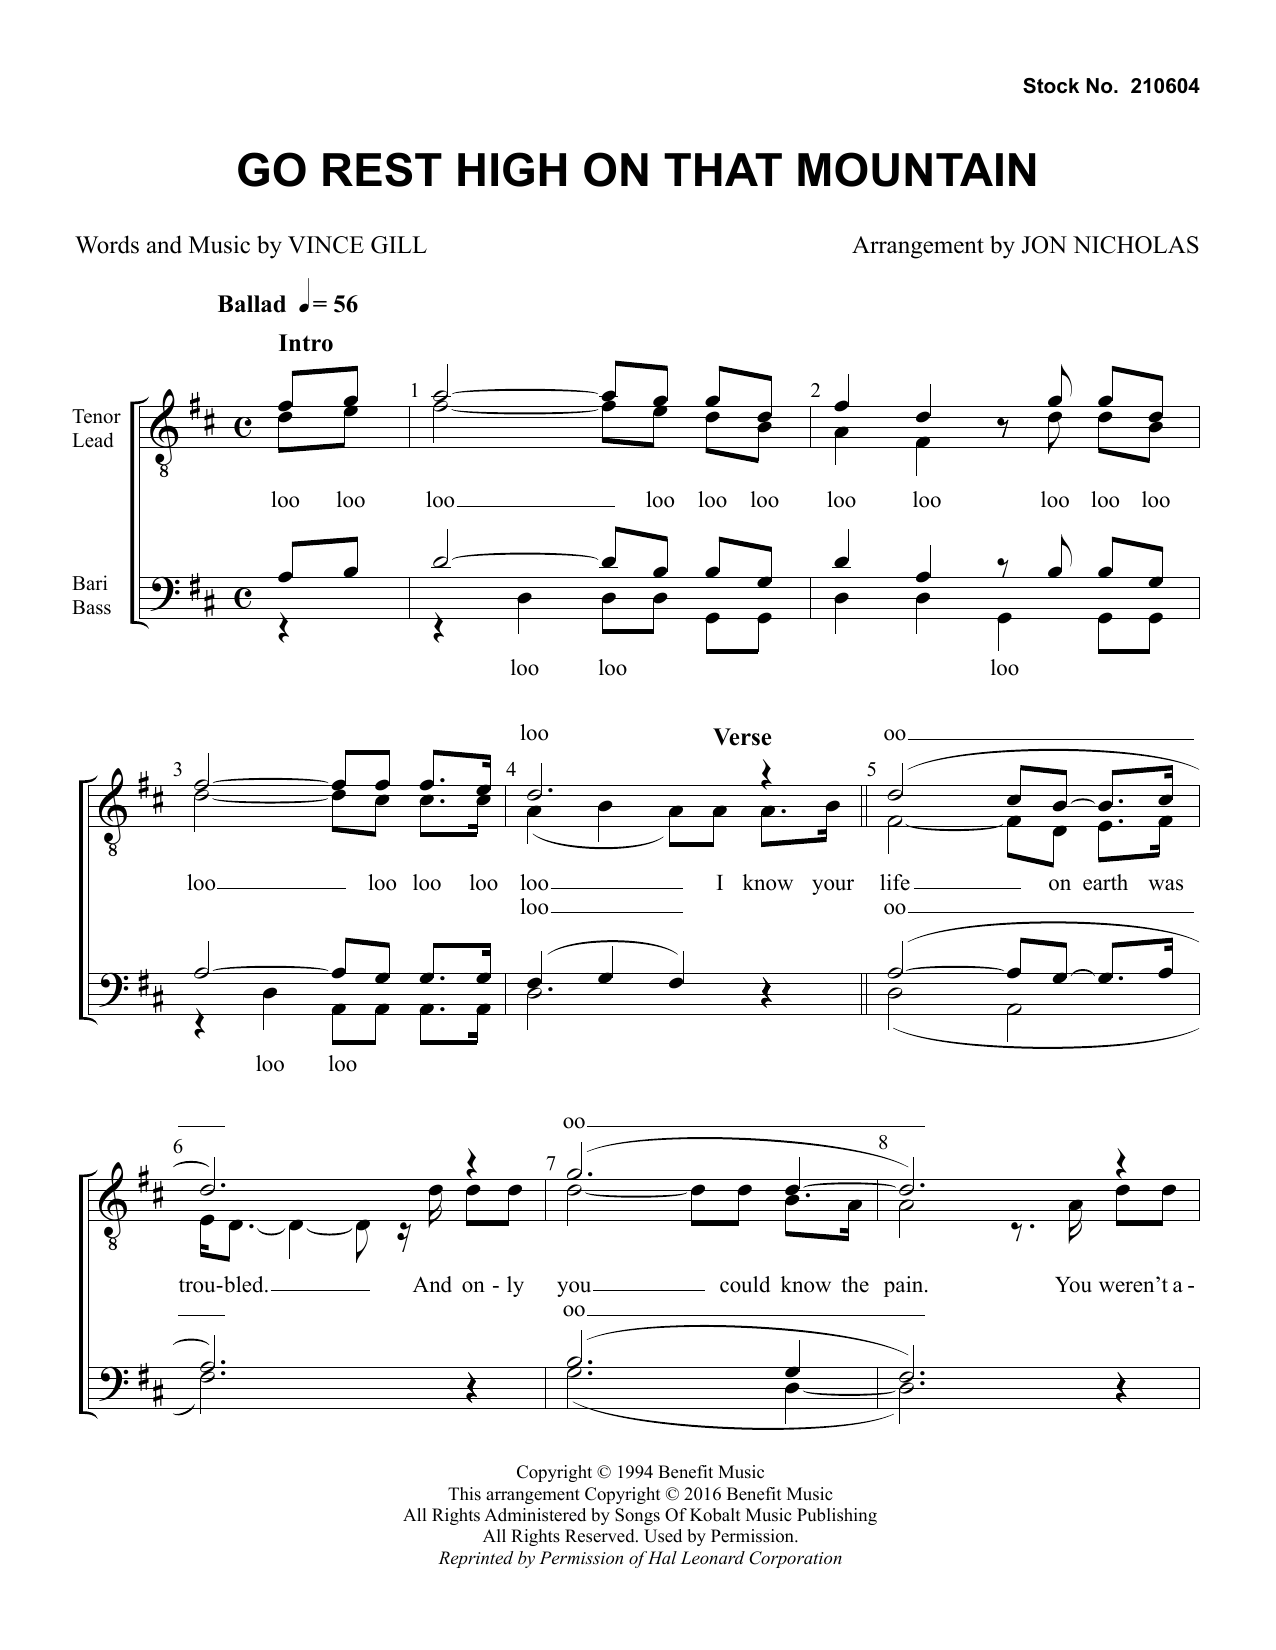 Vince Gill Go Rest High on That Mountain (arr. Jon Nicholas) sheet music notes and chords arranged for TTBB Choir